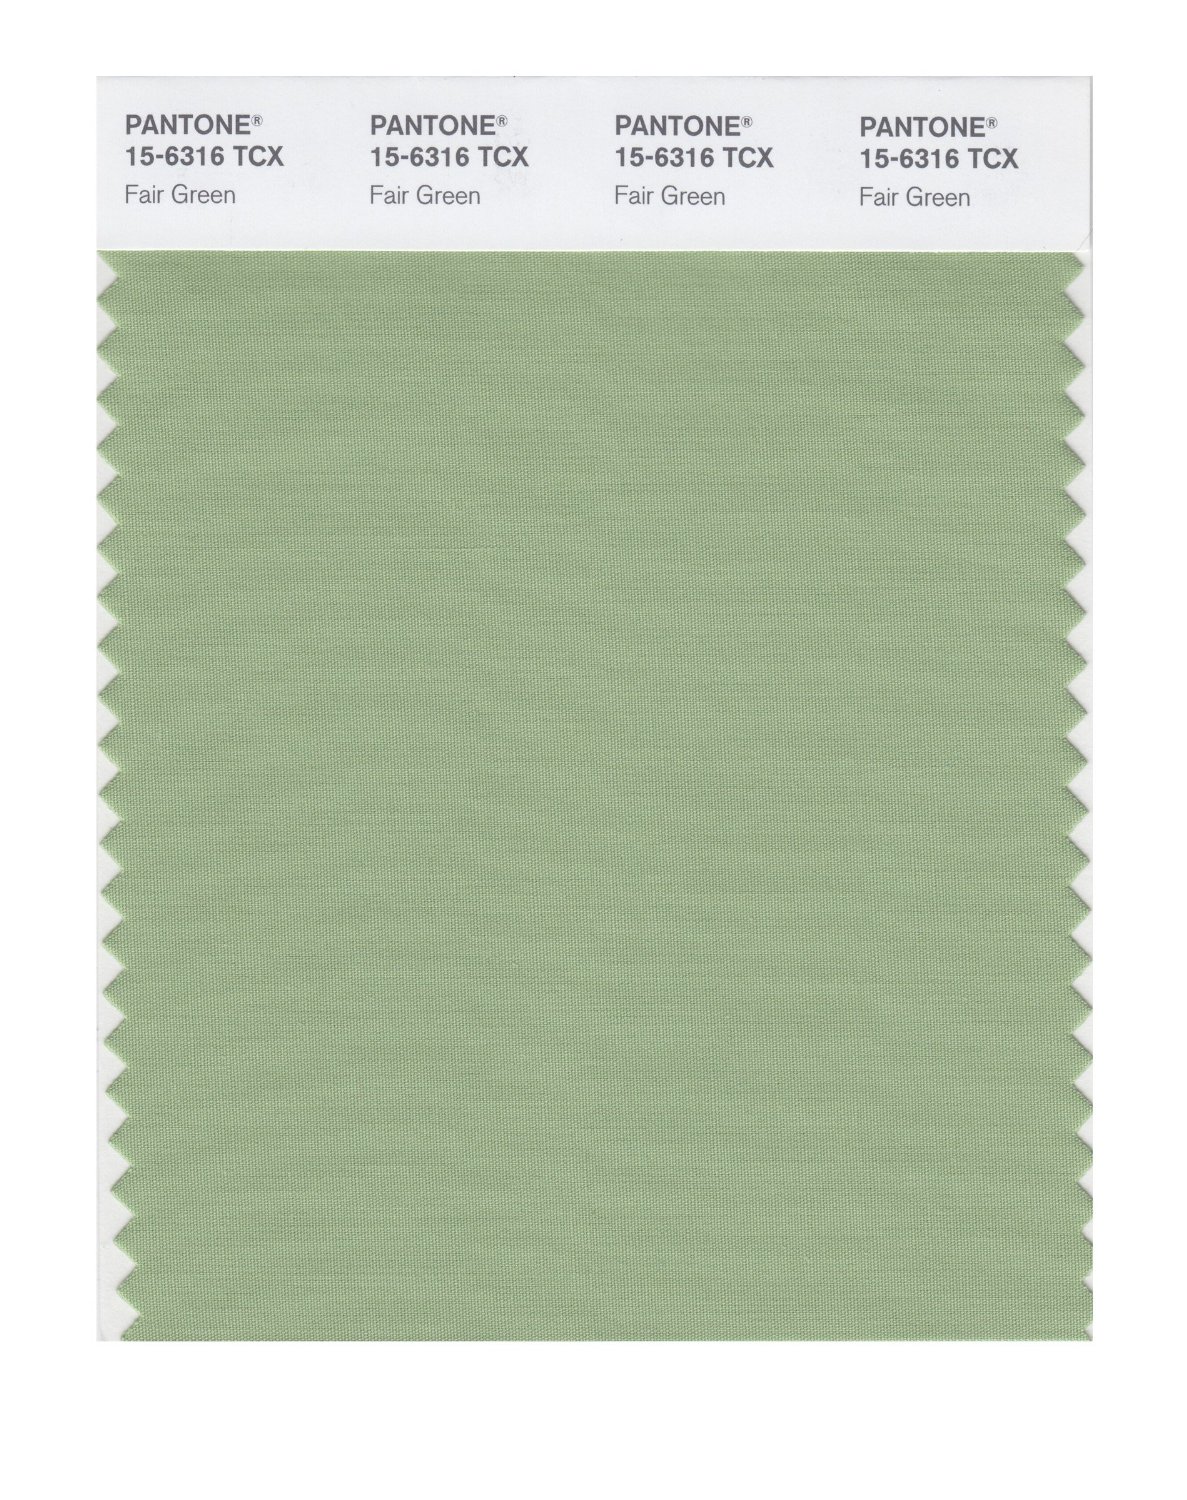 Pantone Cotton Swatch 15-6316 Fair Green